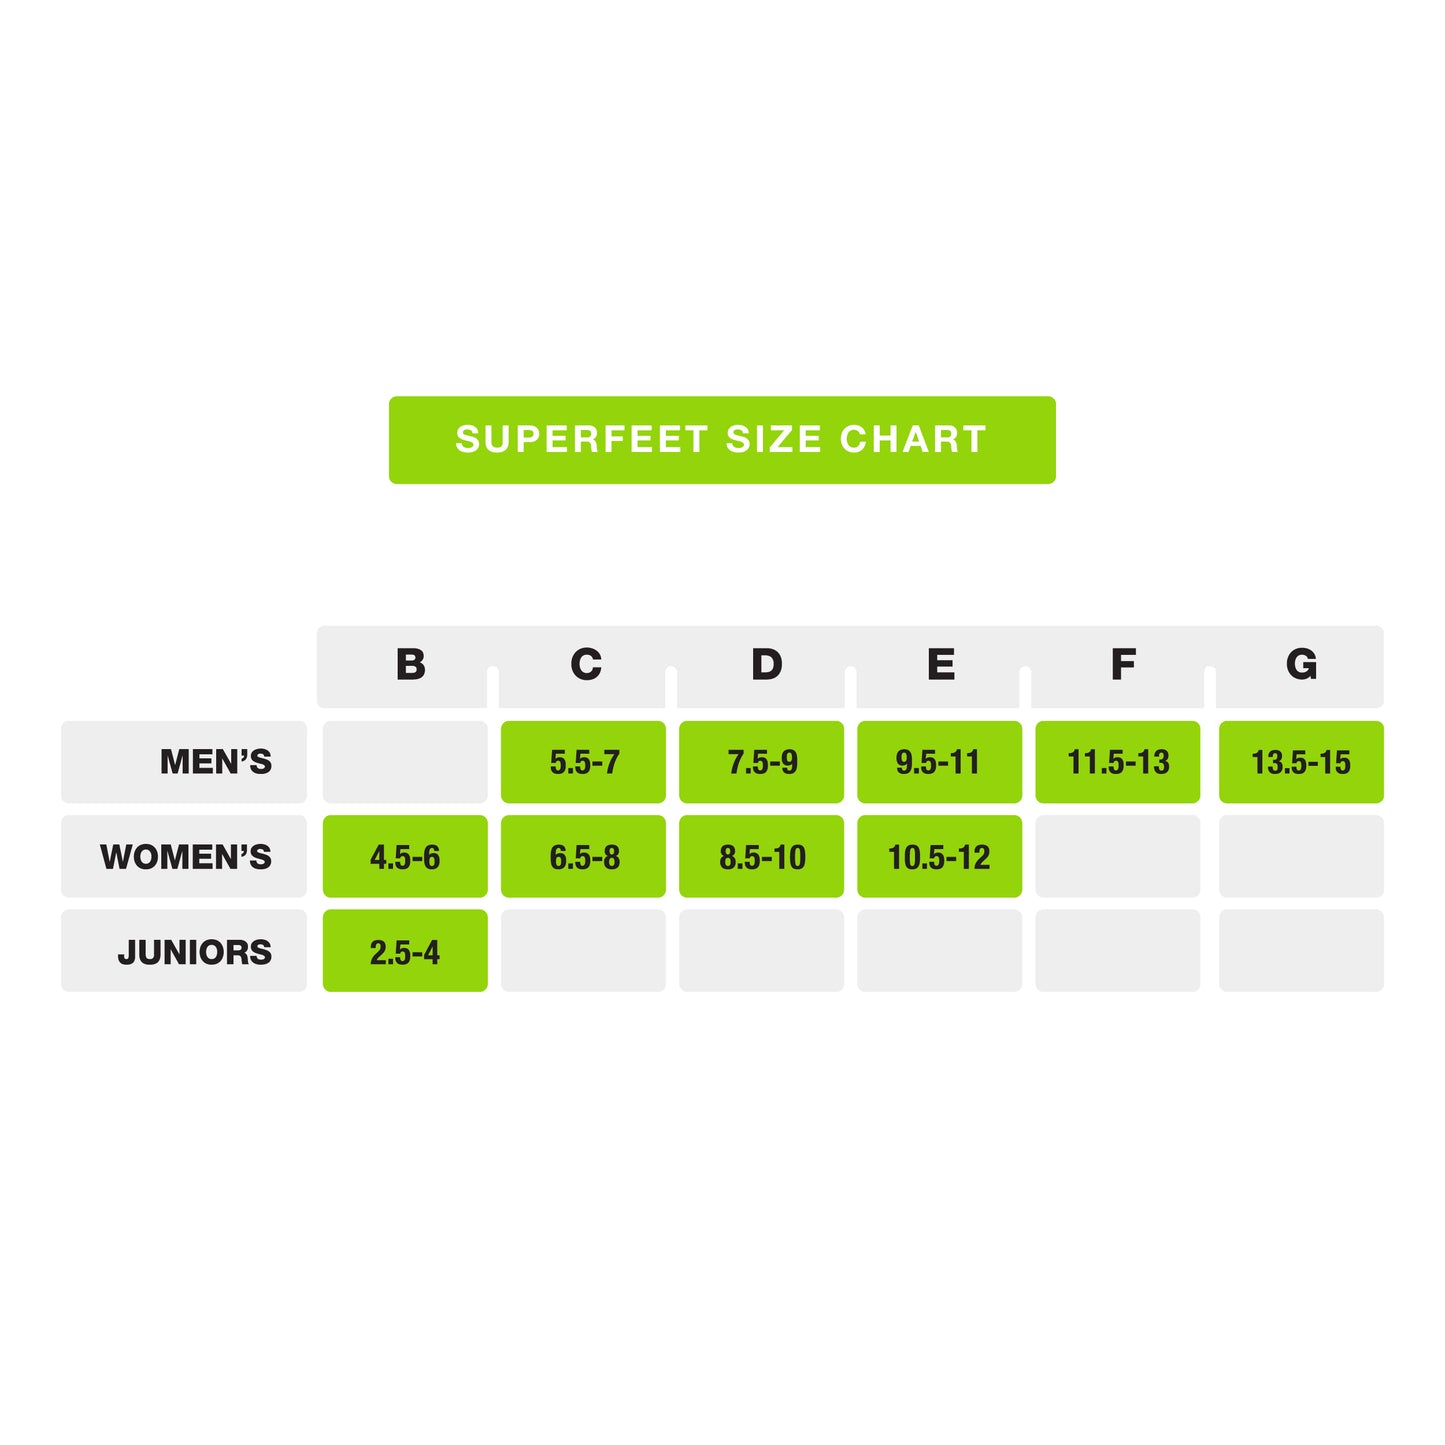 Superfeet - All-Purpose Support High Arch (Green)